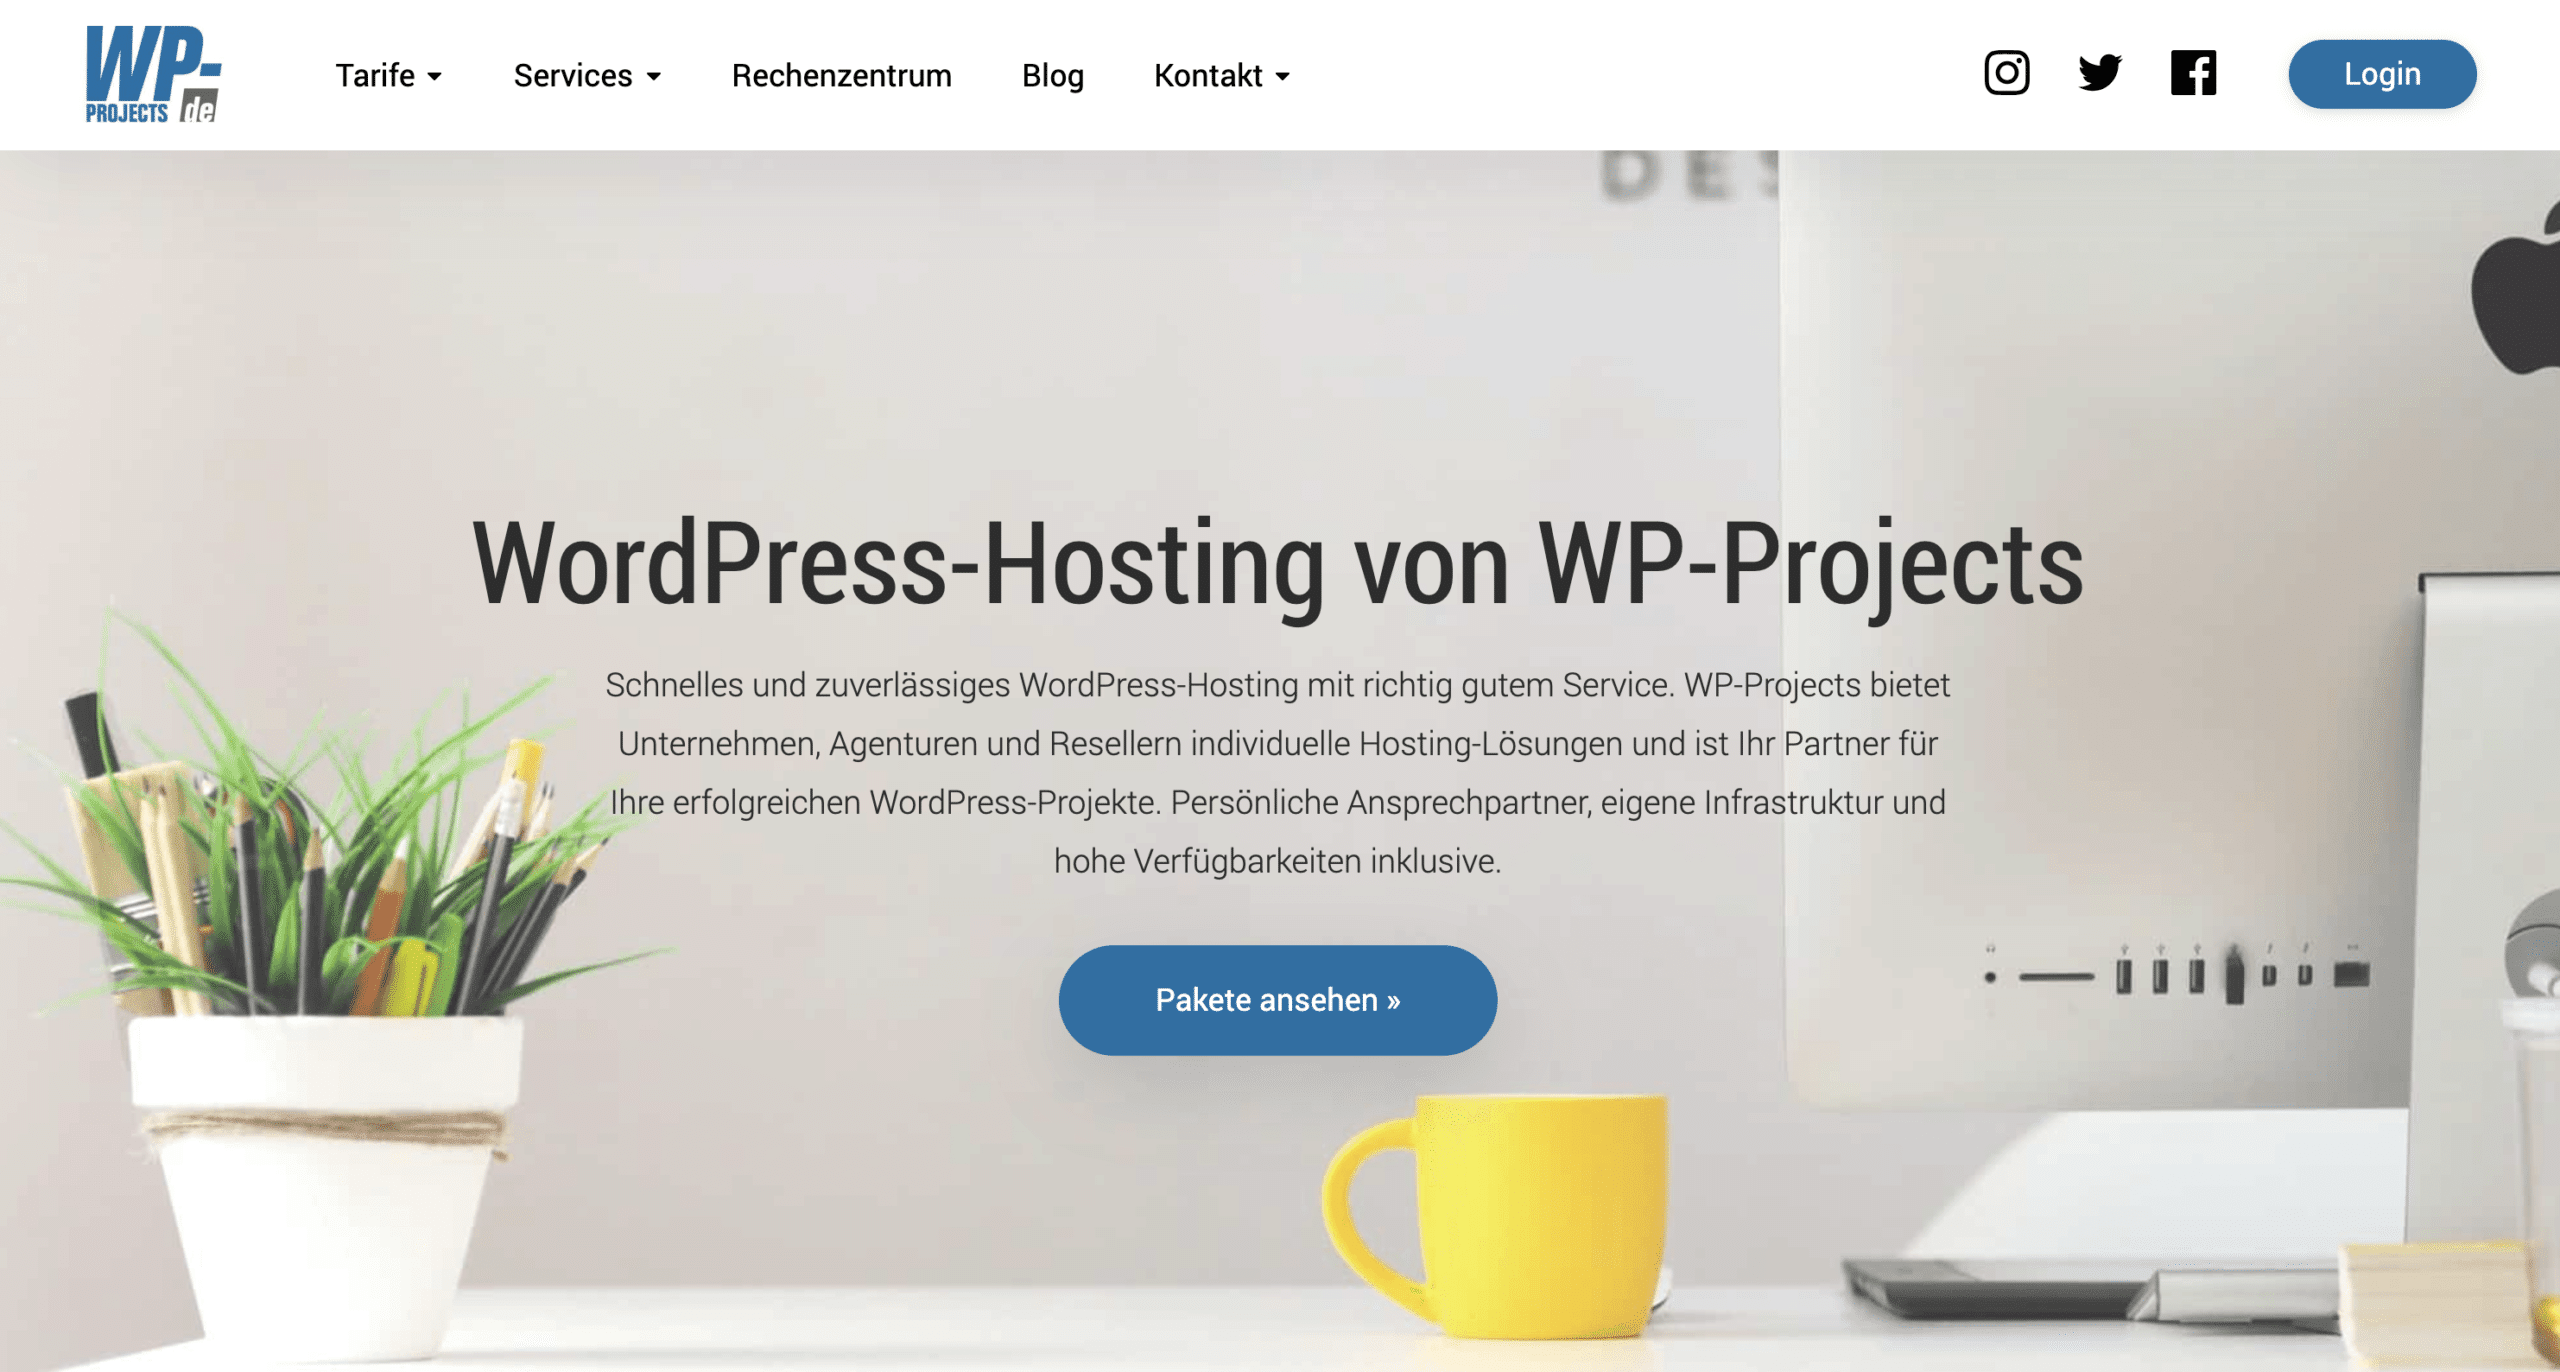 WP-Projects WordPress-Hosting